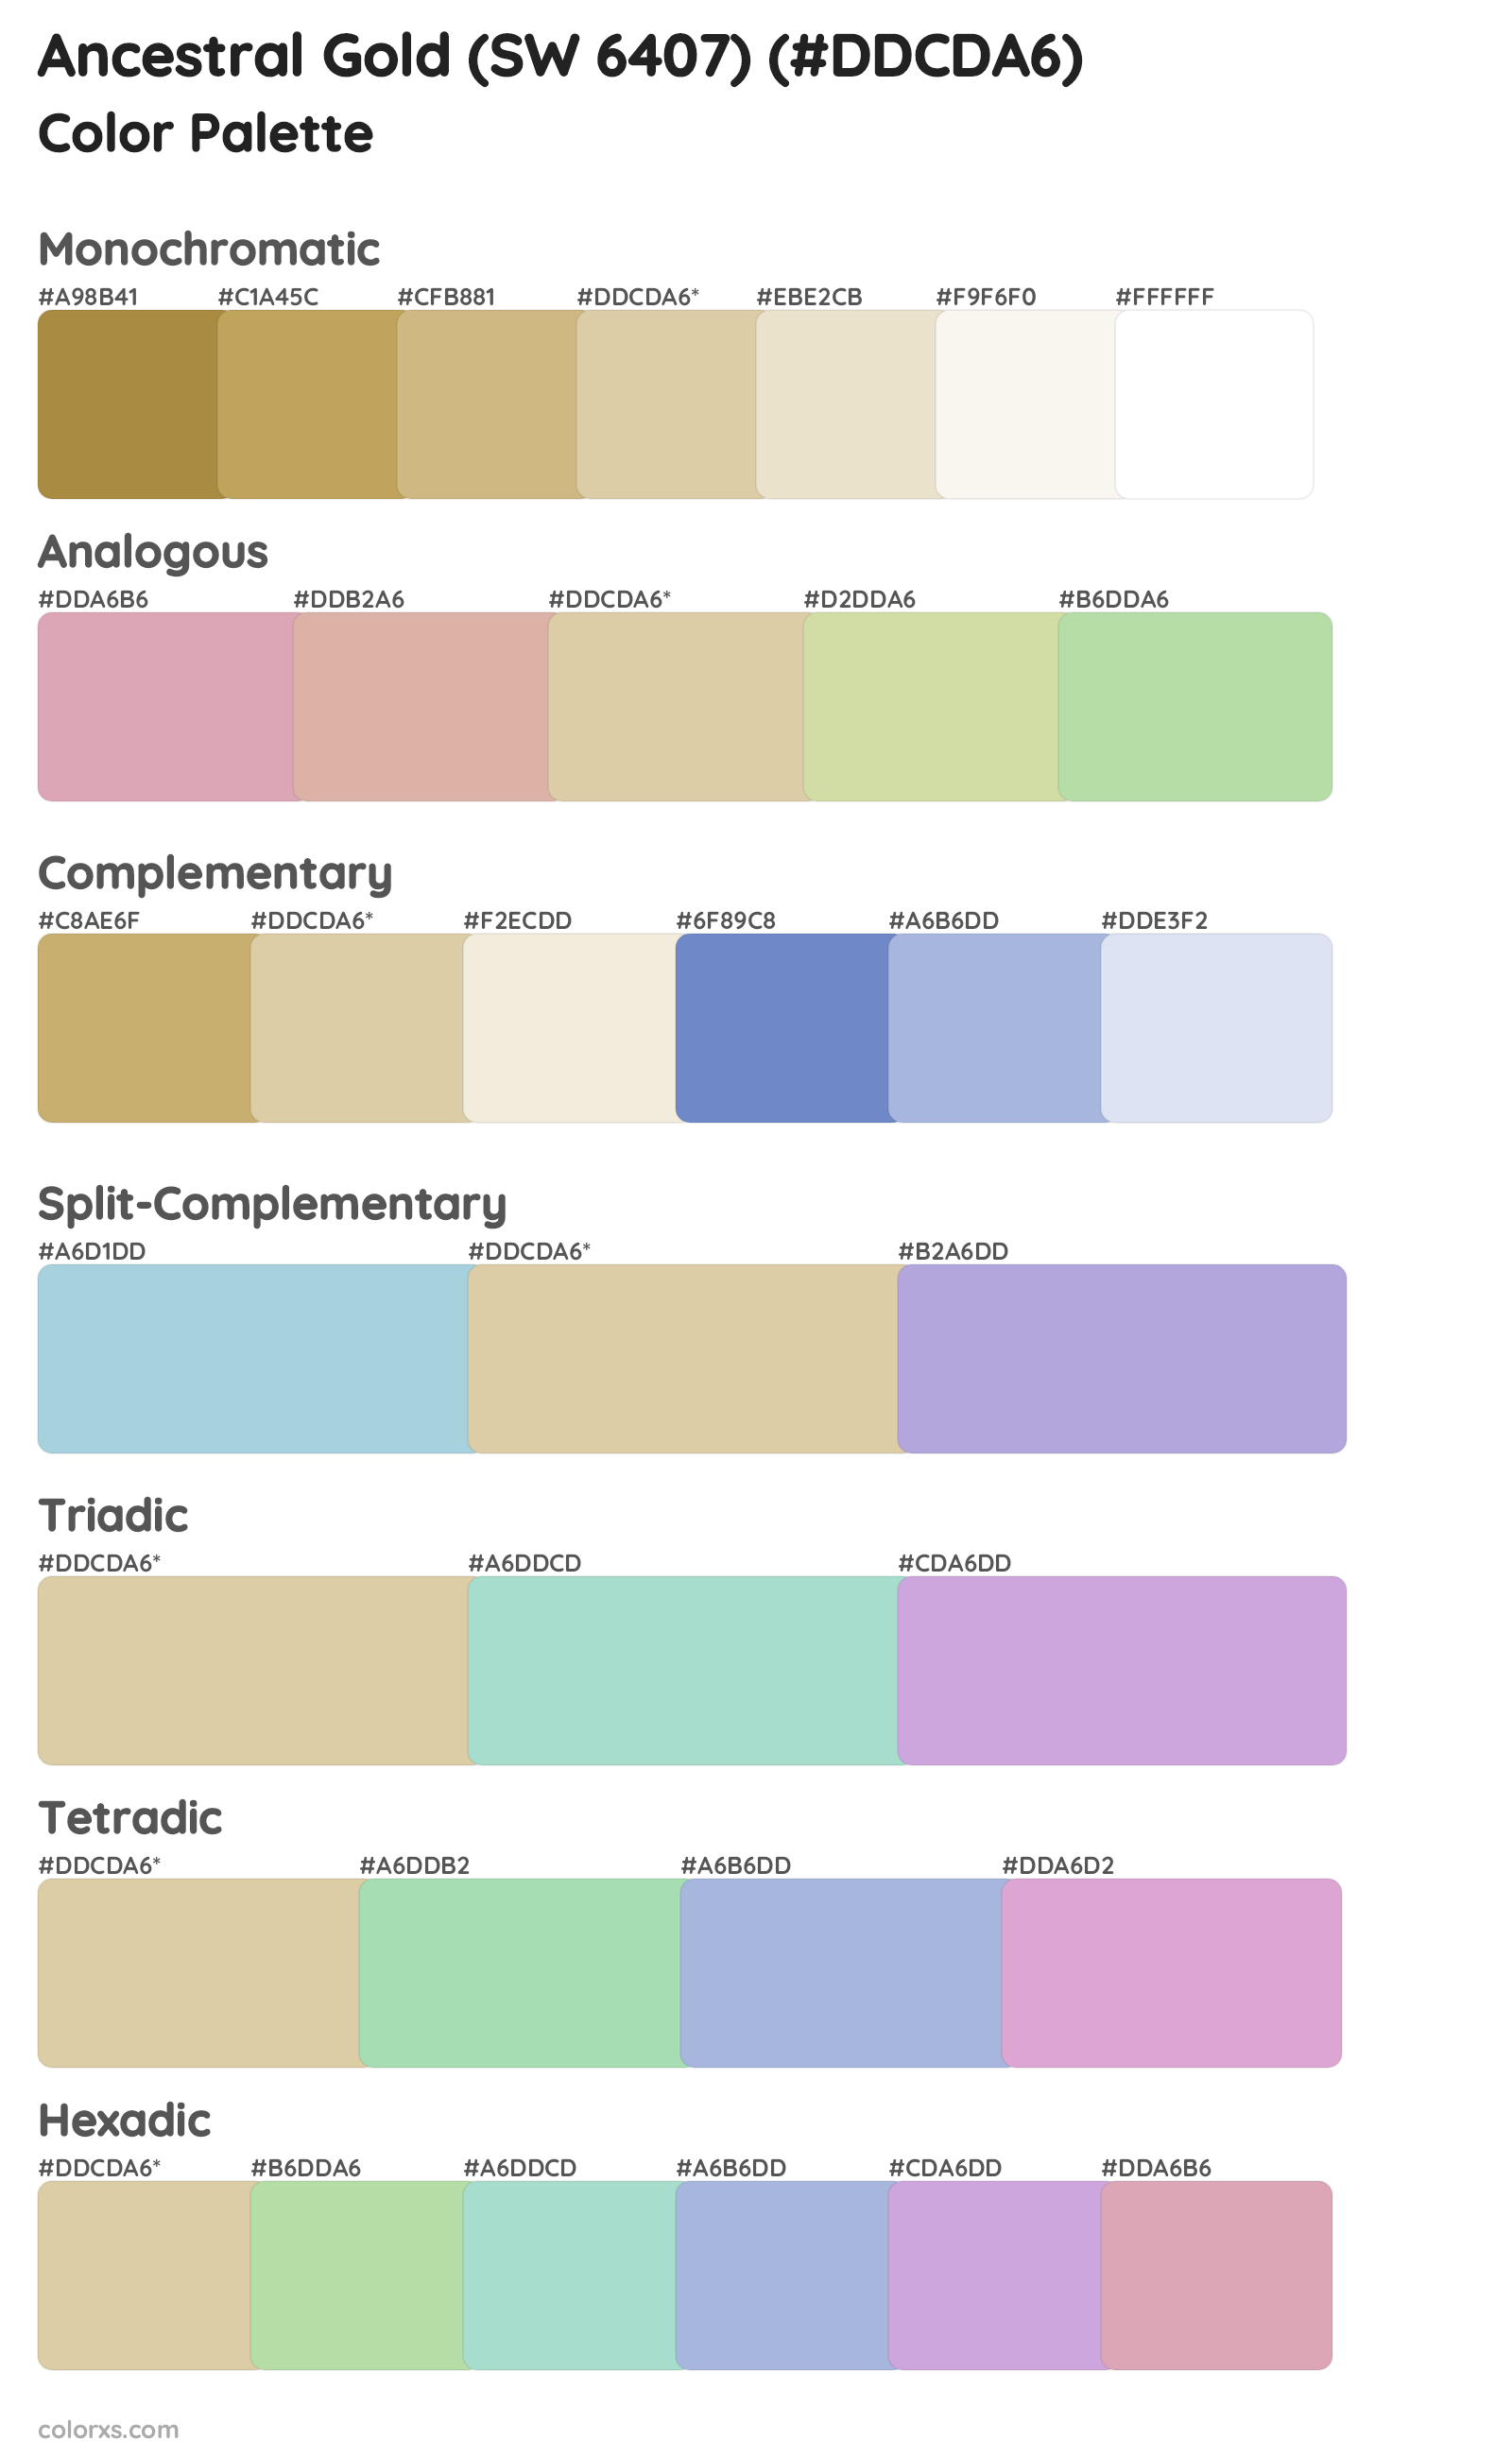 Ancestral Gold (SW 6407) Color Scheme Palettes